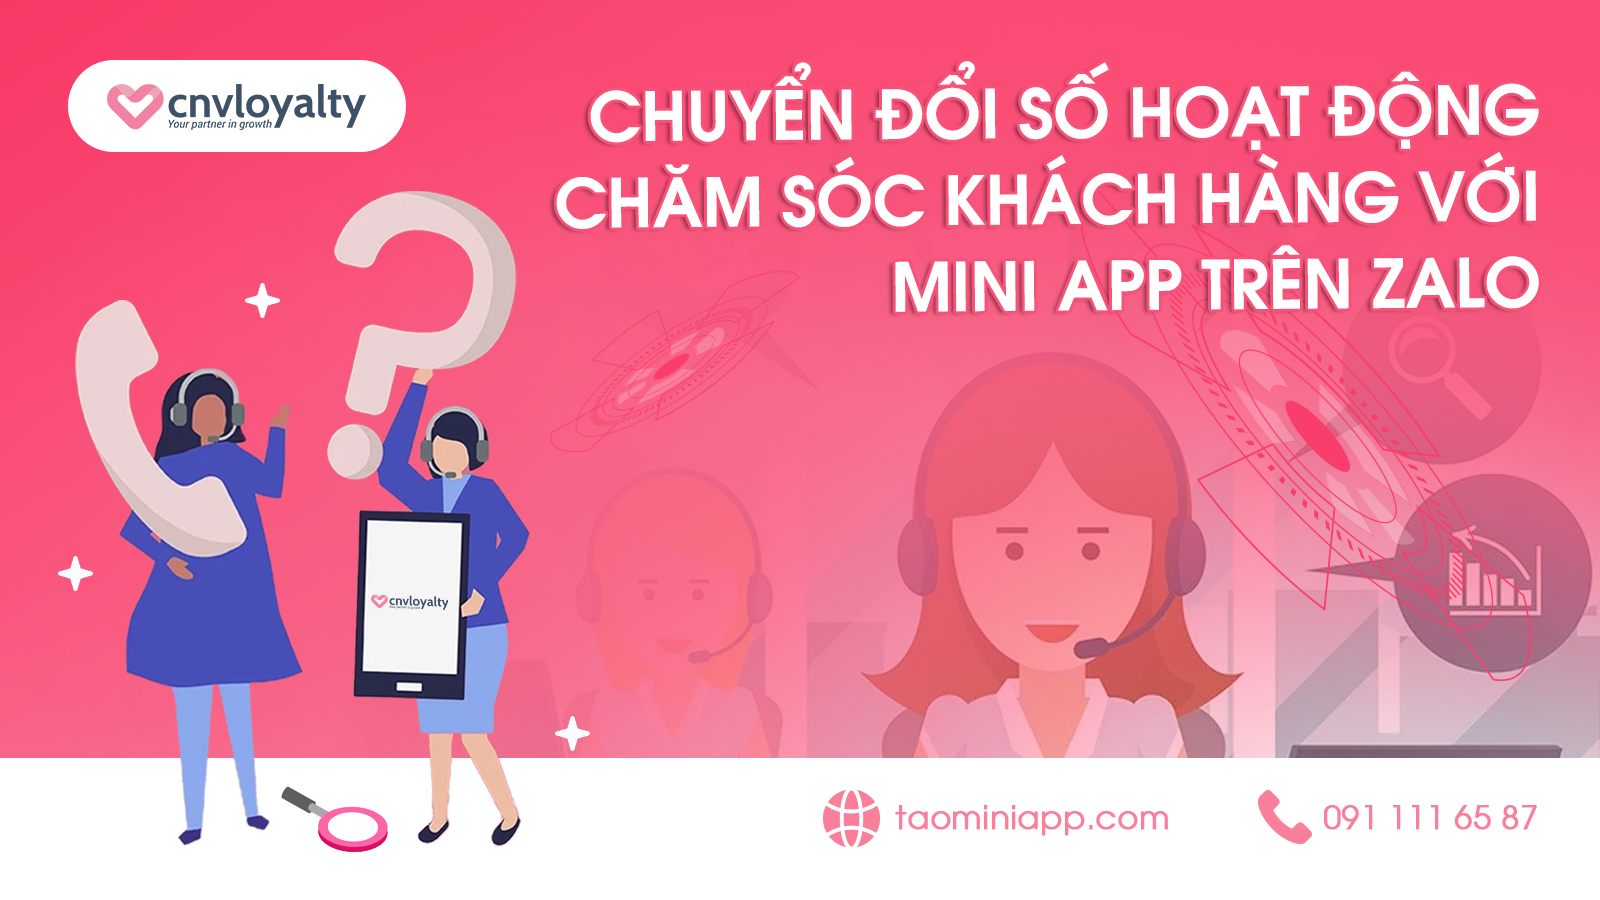 Mini App trên Zalo của CNV Loyalty